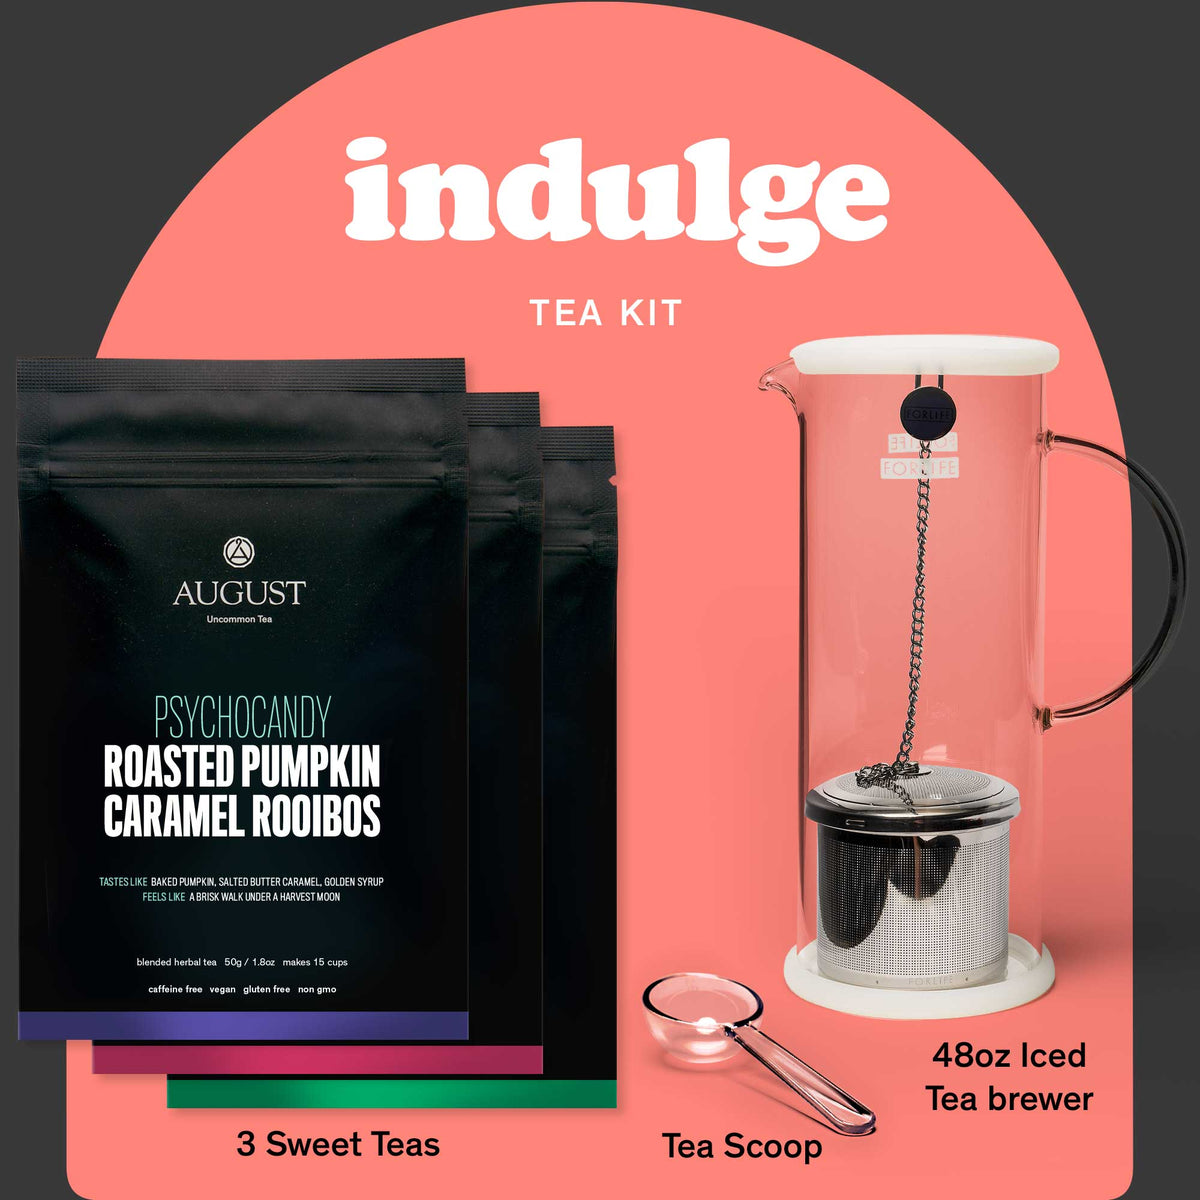 Indulge Tea Kit: 3 Sweet Teas to Satisfy Sugar Cravings